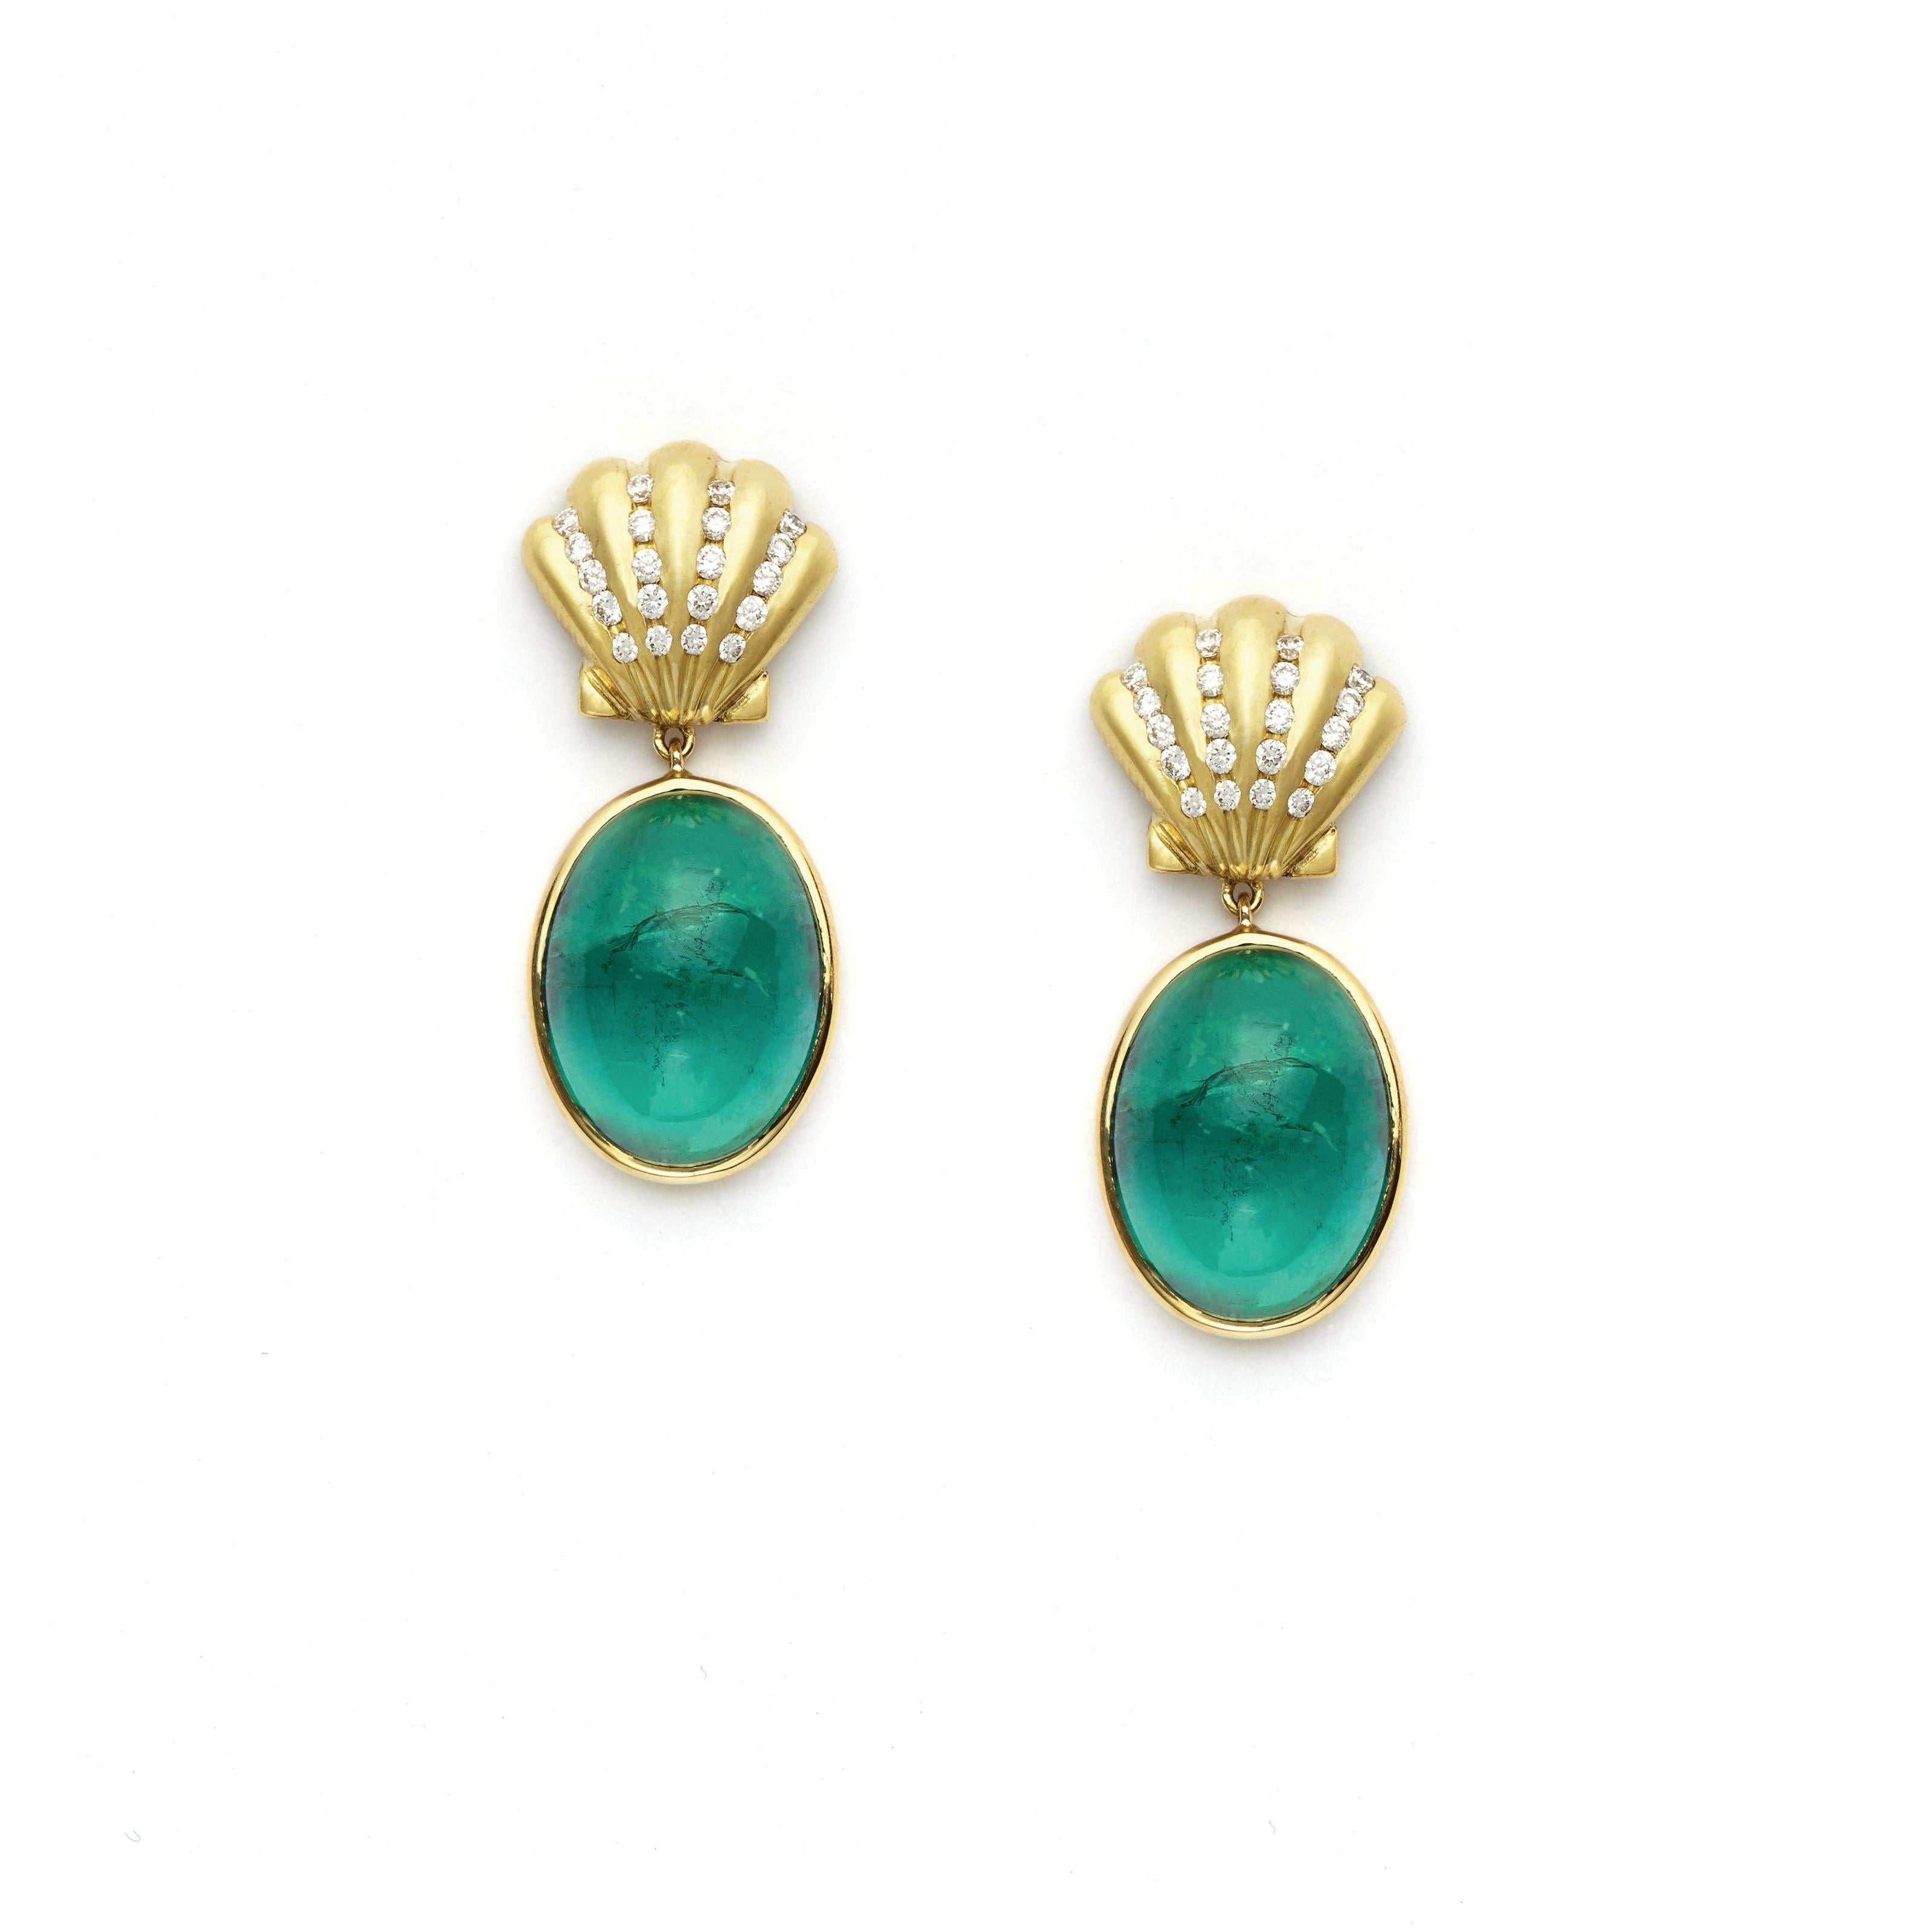 Oval Cut Green Cabochon Cut Tourmaline Earrings with 18 Karat Gold and Diamond Shells